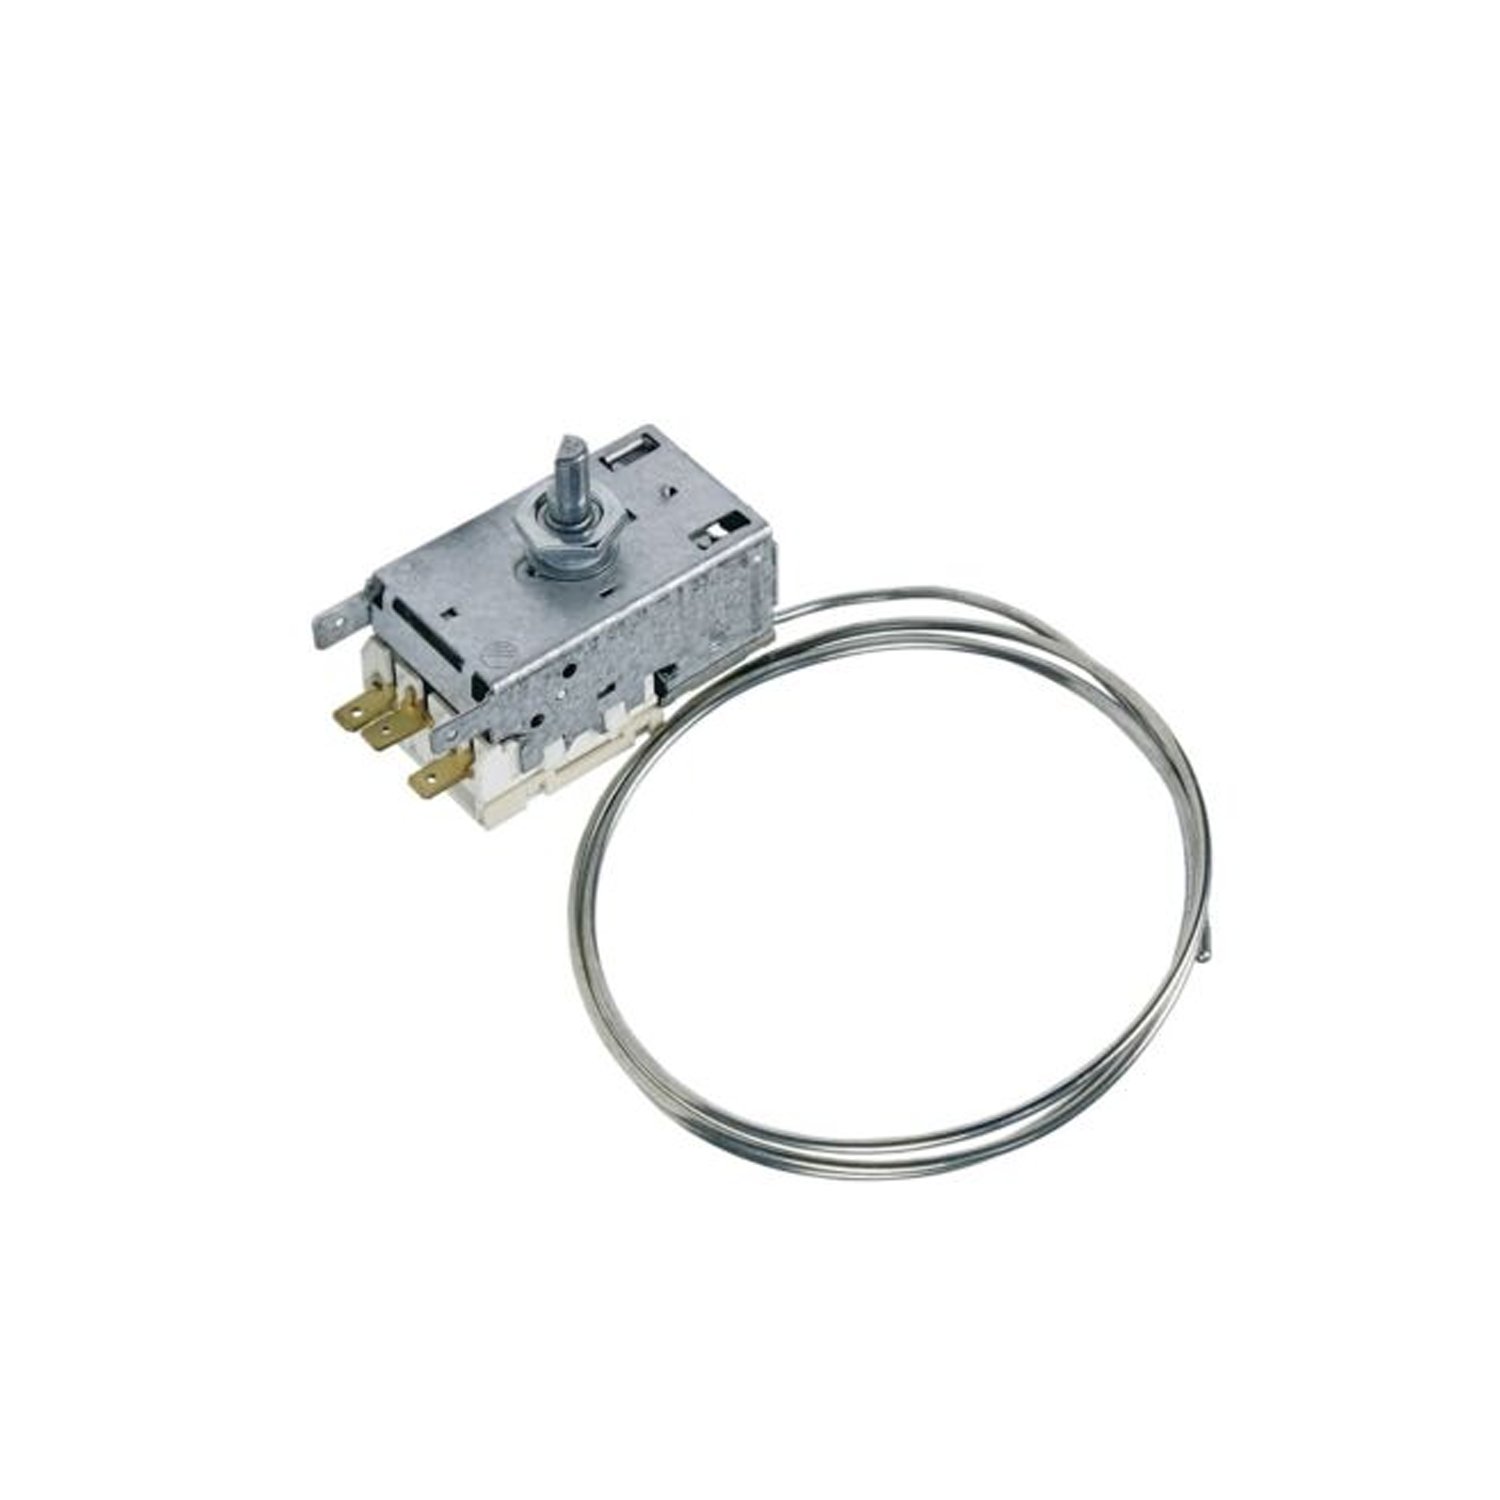 Thermostat Ranco K59-L2683 for refrigerator ARCELIK 4502011100, L 895 mm